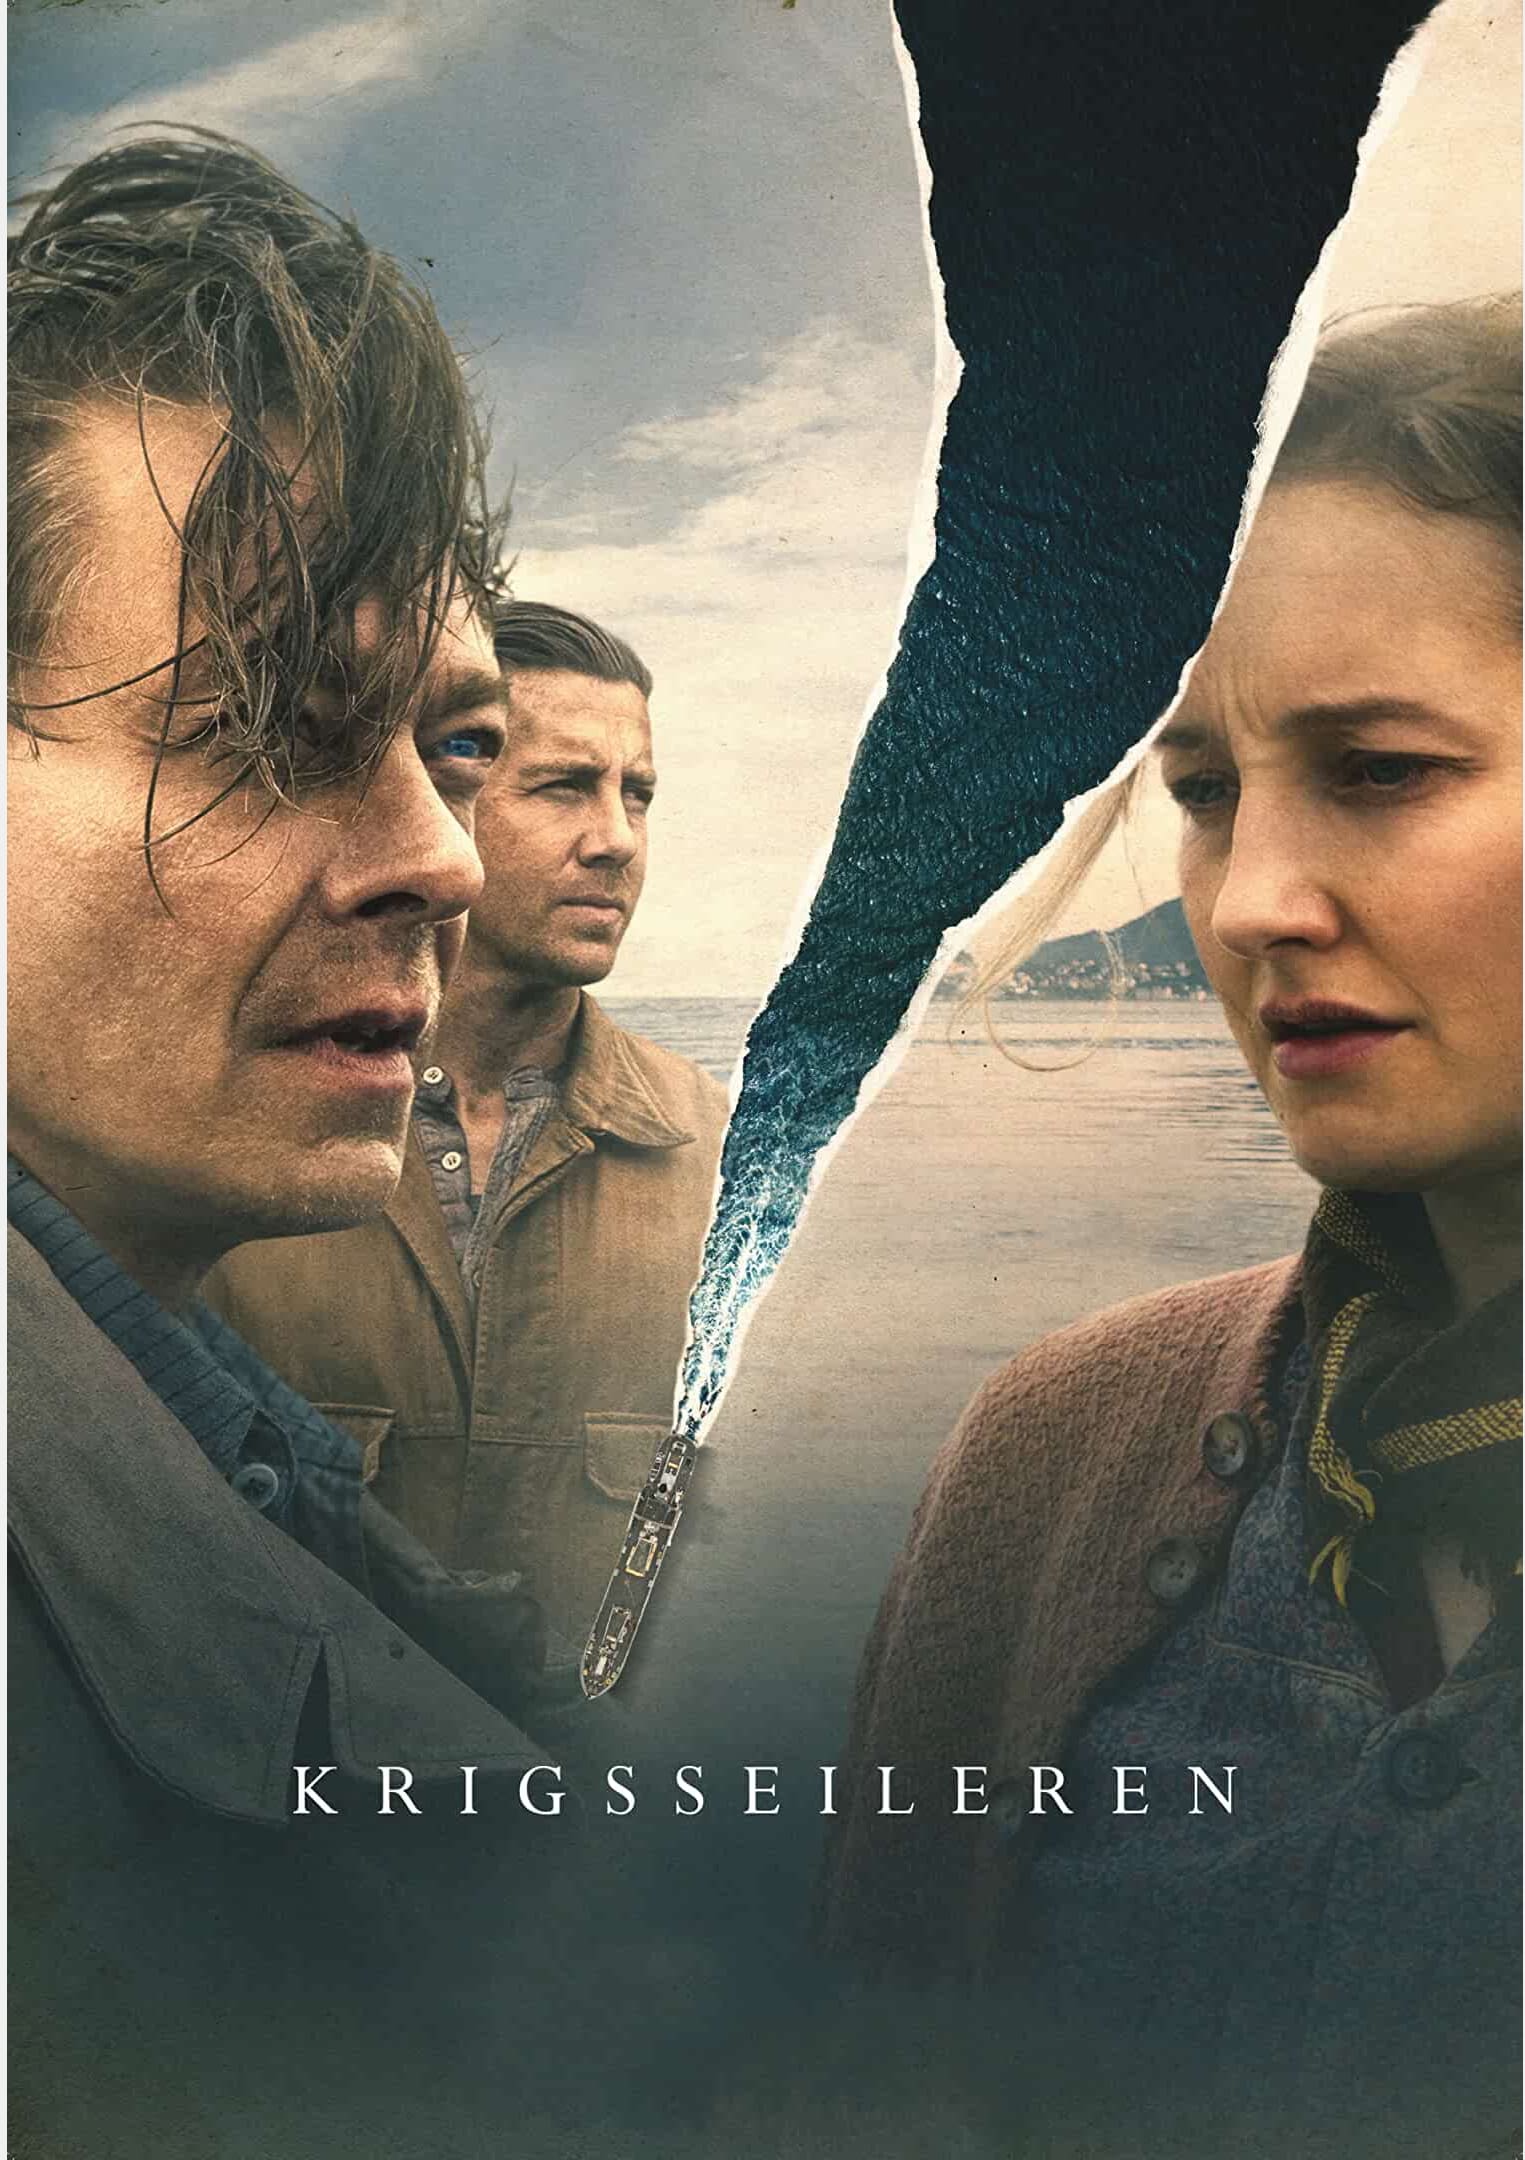 TV ratings for War Sailor (Krigsseileren) in Sweden. Netflix TV series